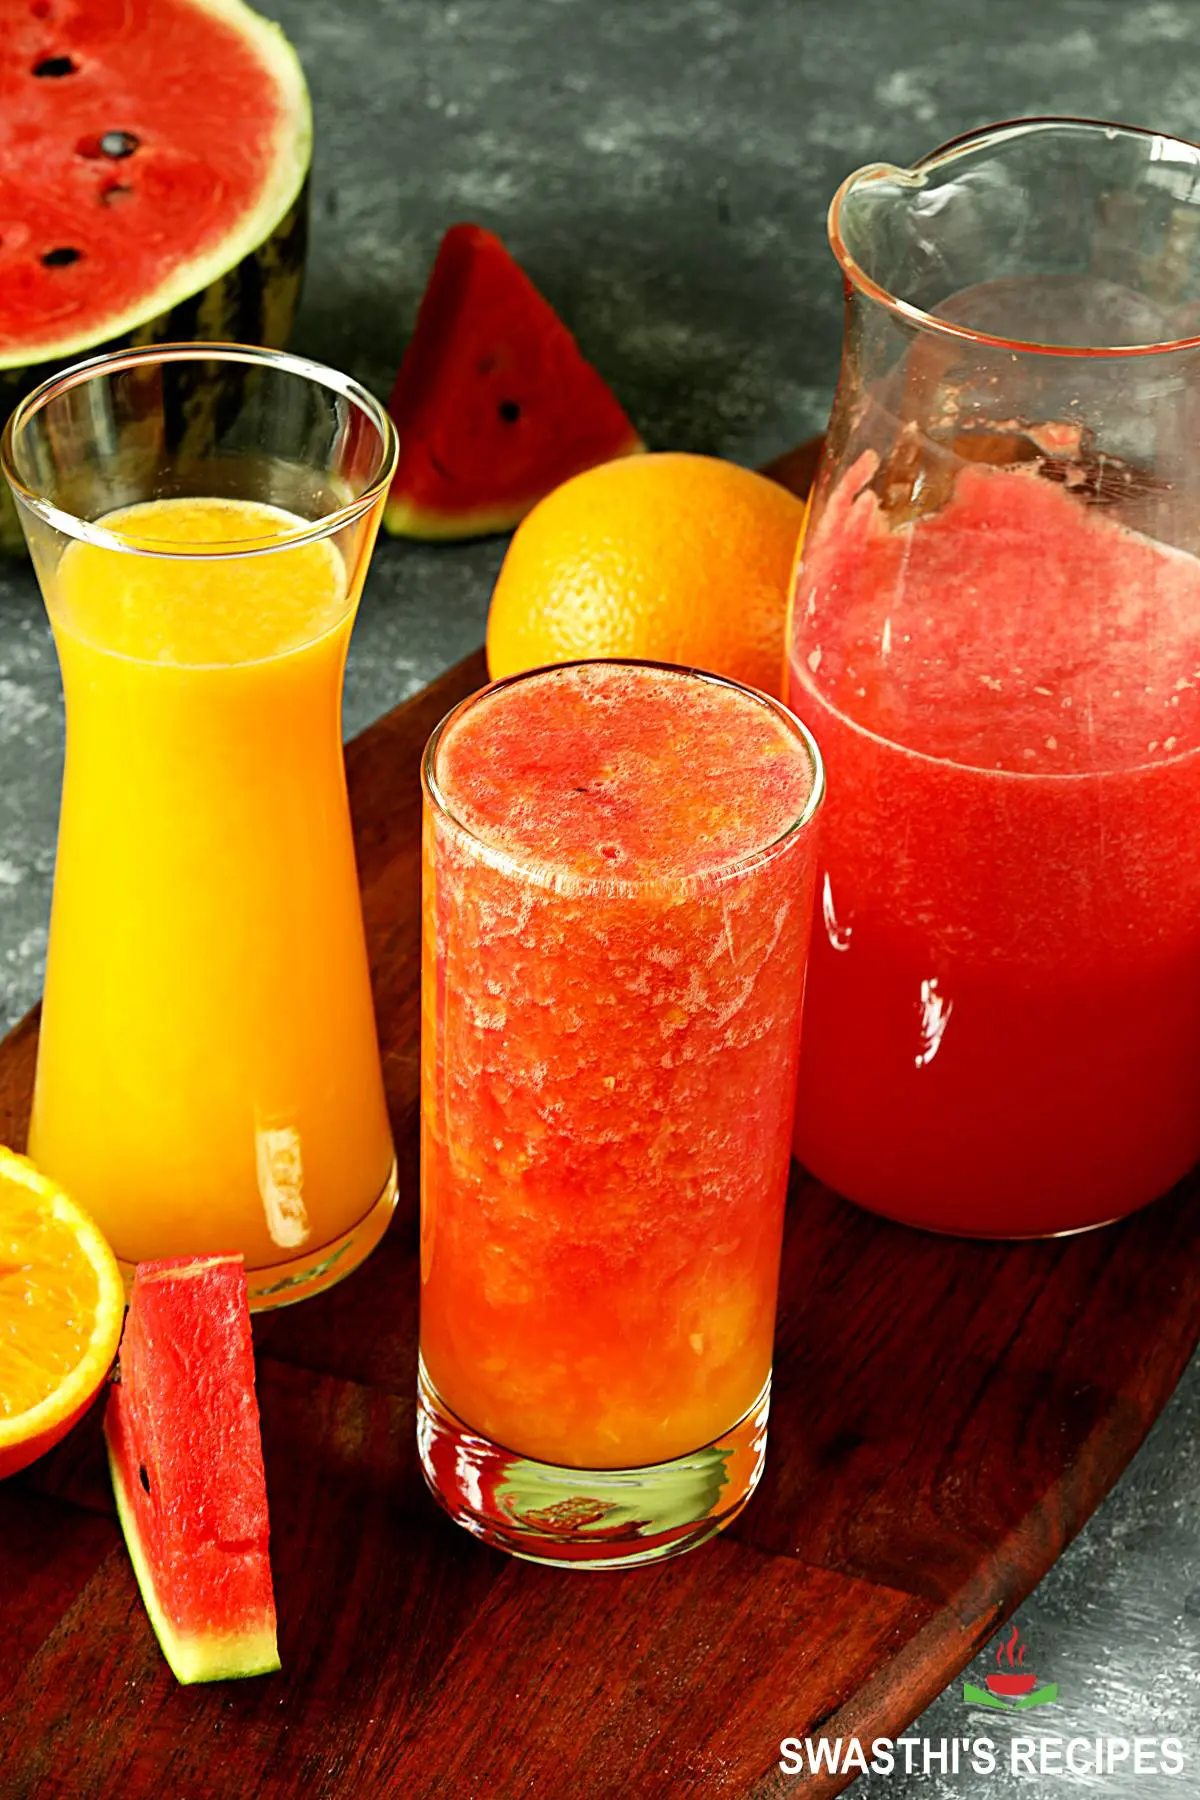 Watermelon & orange juice